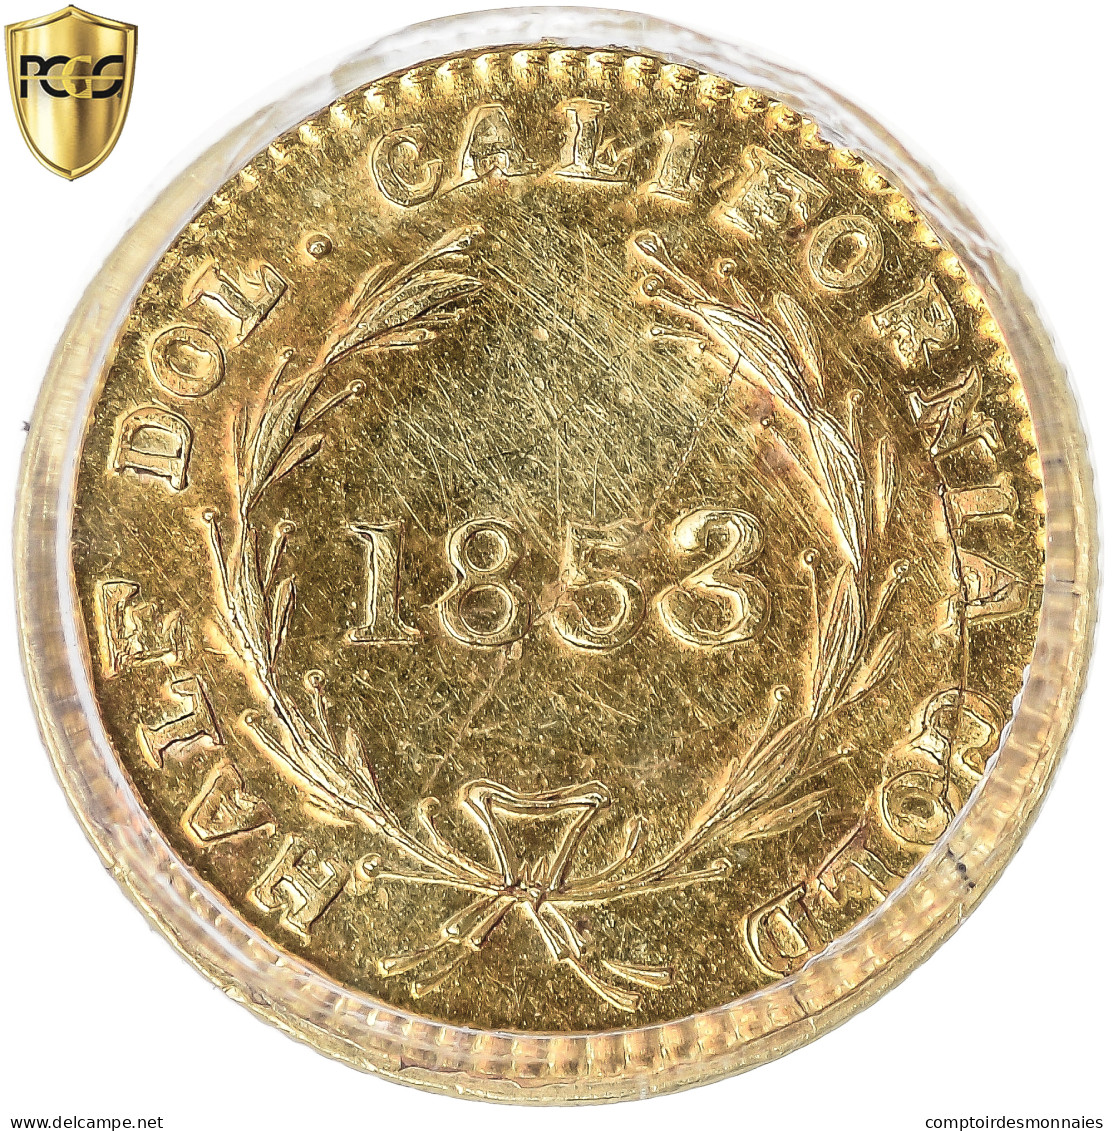 Monnaie, États-Unis, Coronet Head, Half Dollar, 1853, California Gold, PCGS - 1$, 3$, 4$